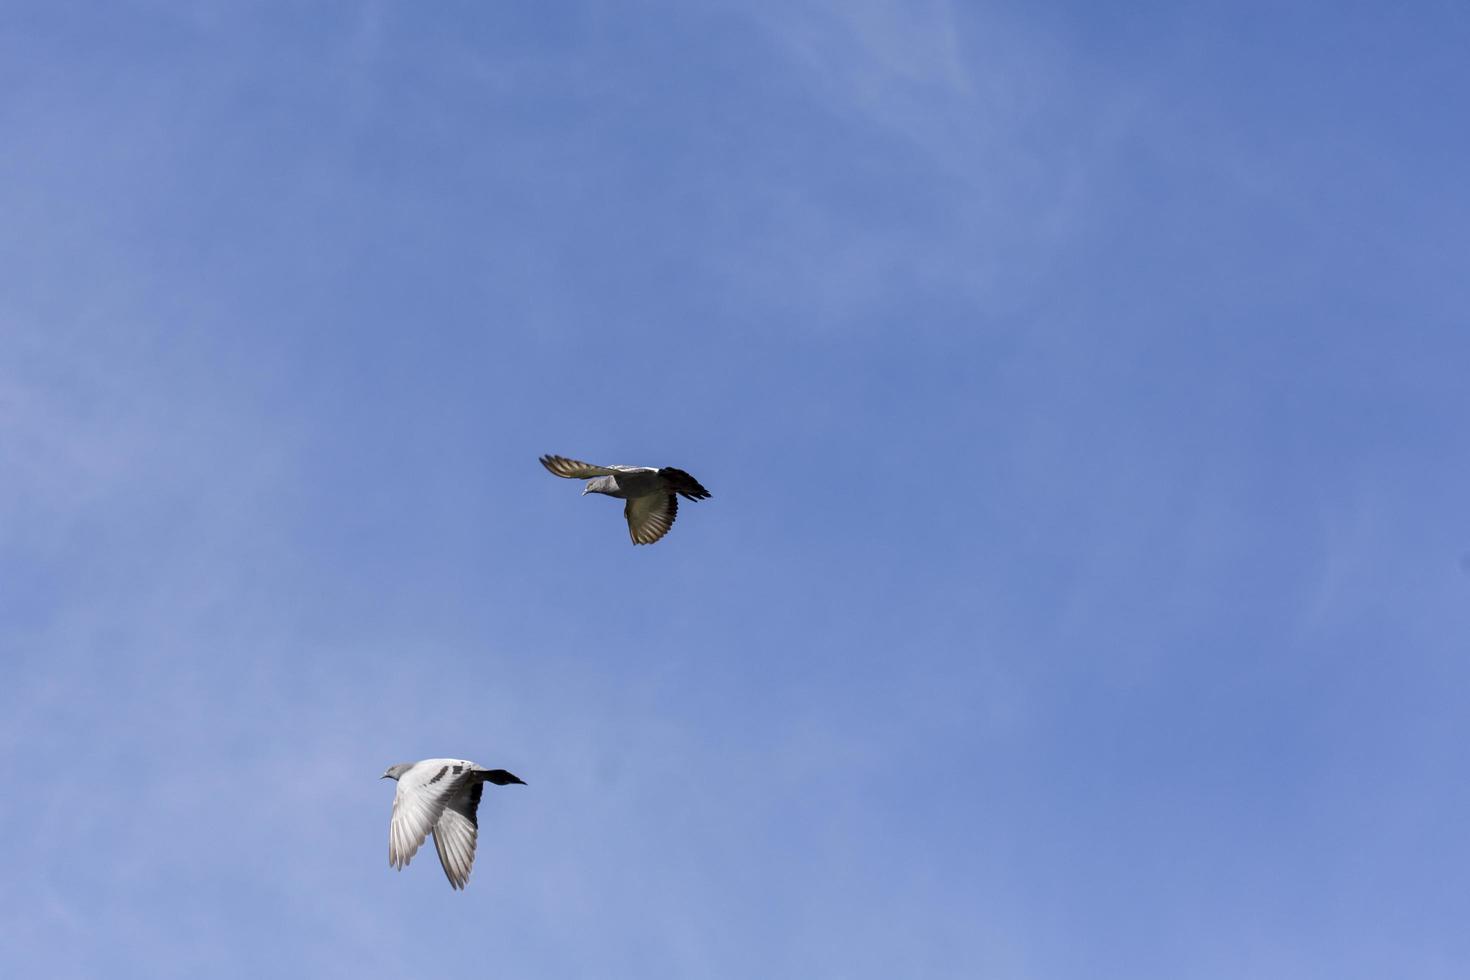 Vol de pigeons au-dessus de la ville de garray, province de soria, castilla y leon, espagne photo